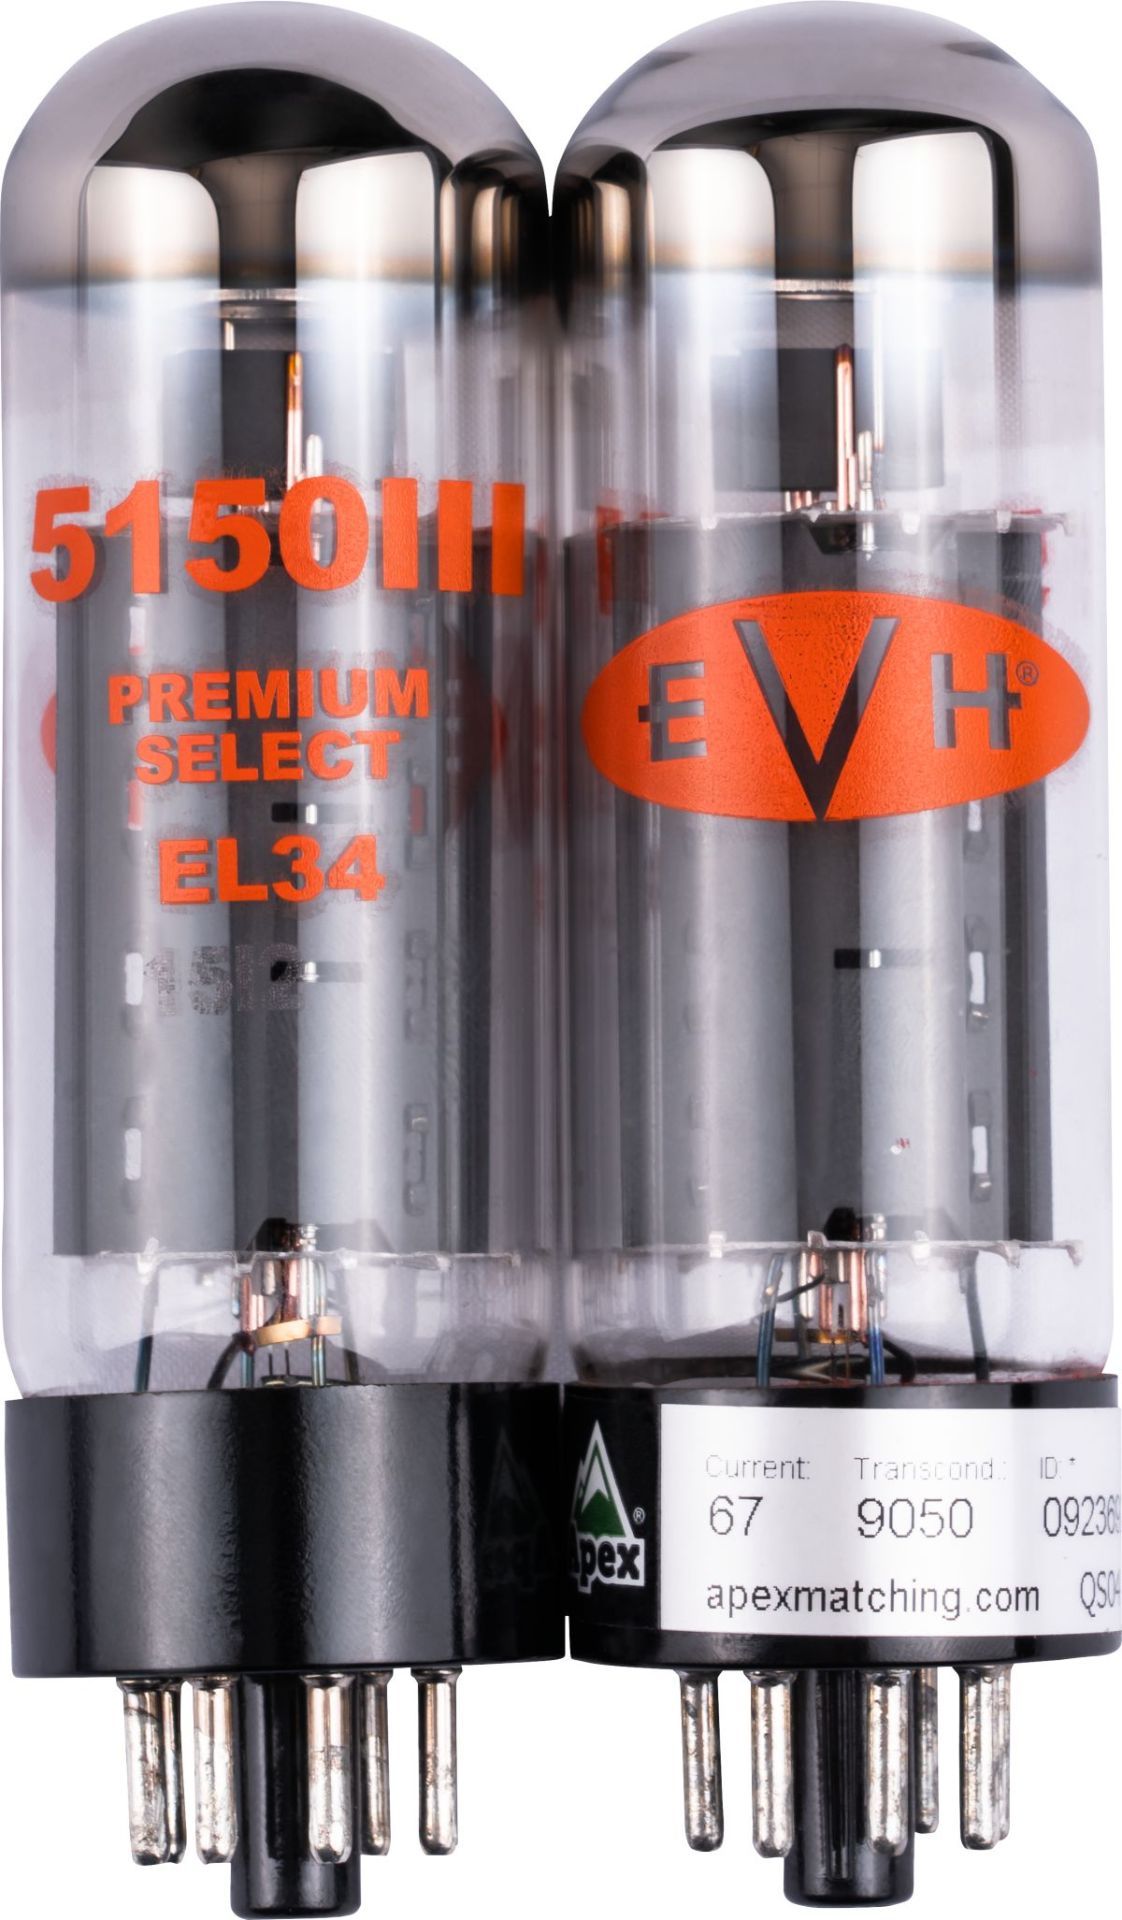 EVH EL34 Tube Kit